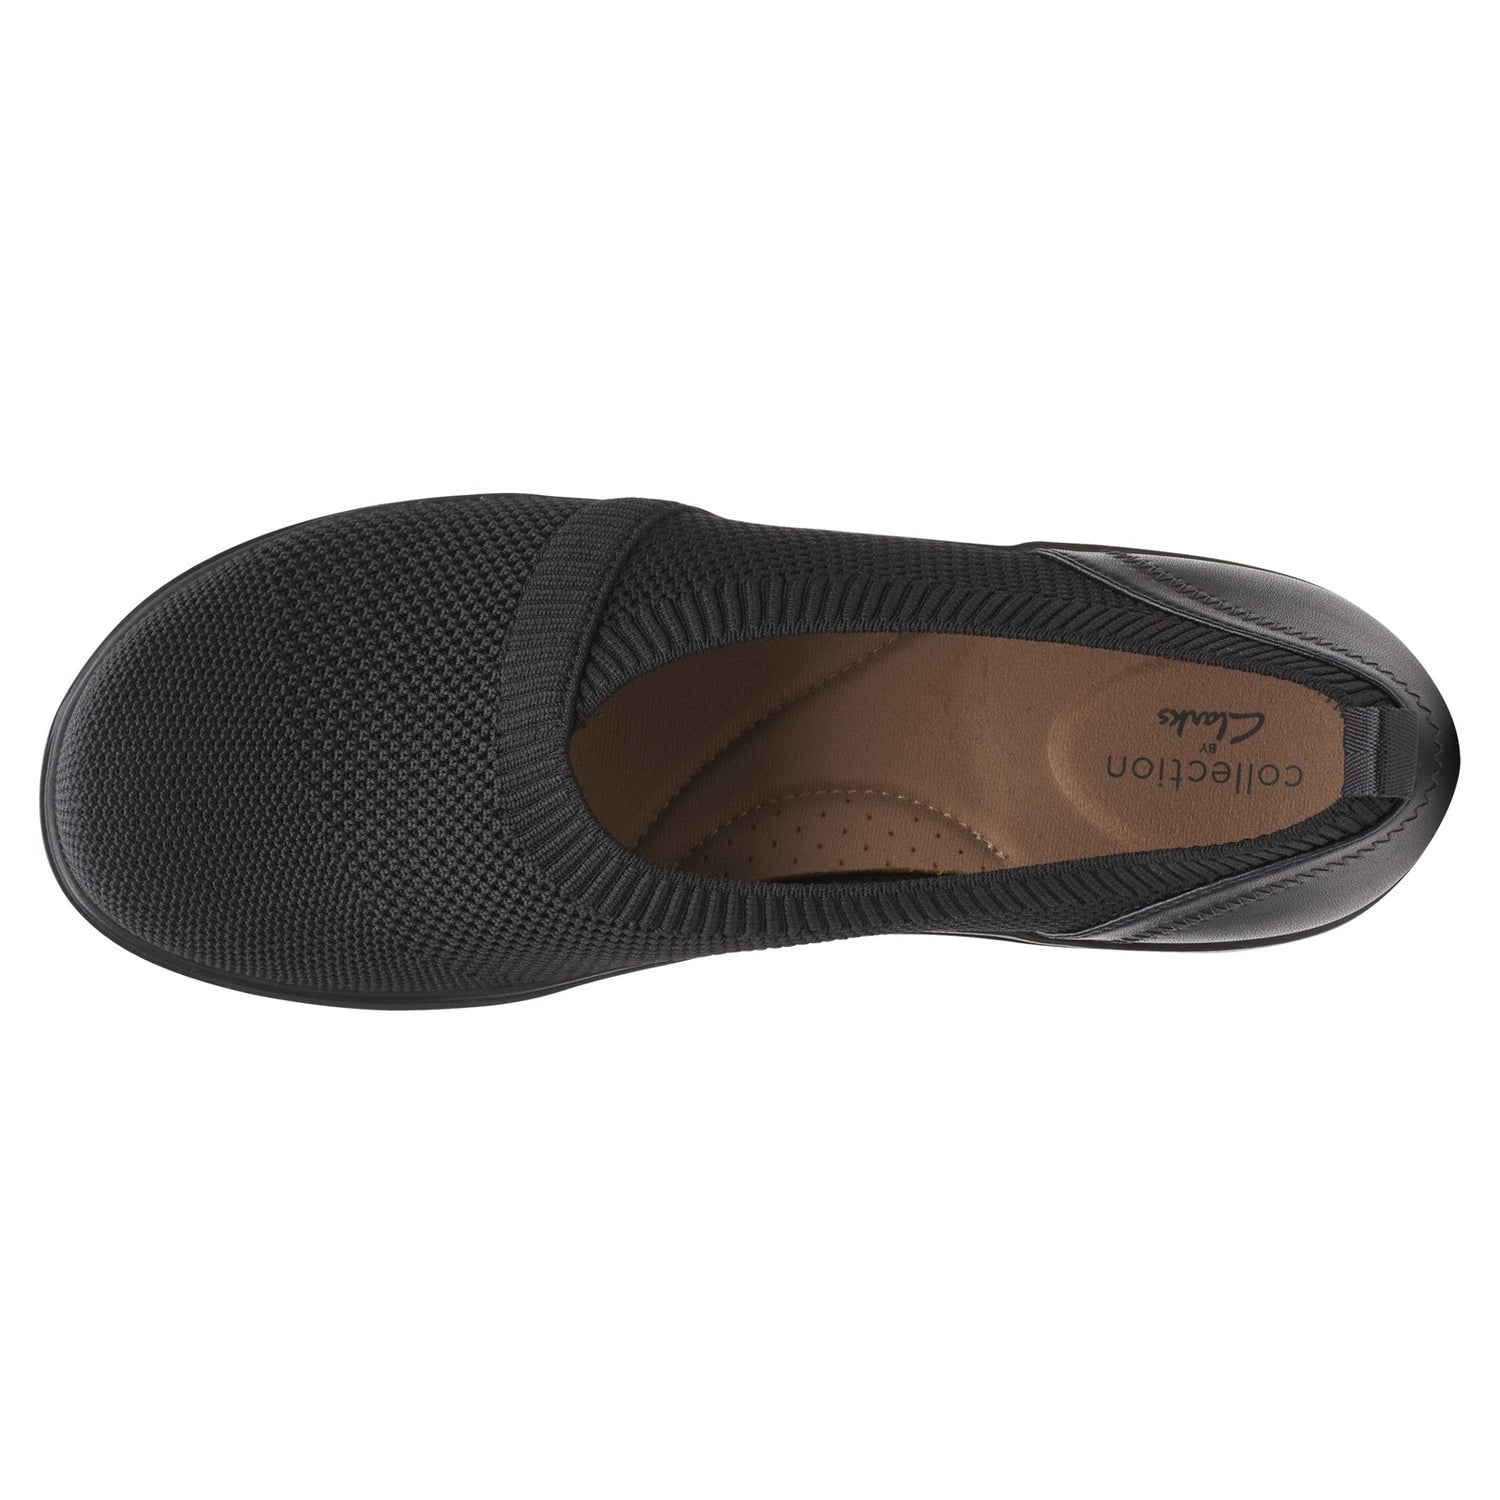 Peltz Shoes  Women's Clarks Sashlyn Style Slip-On BLACK 26163135